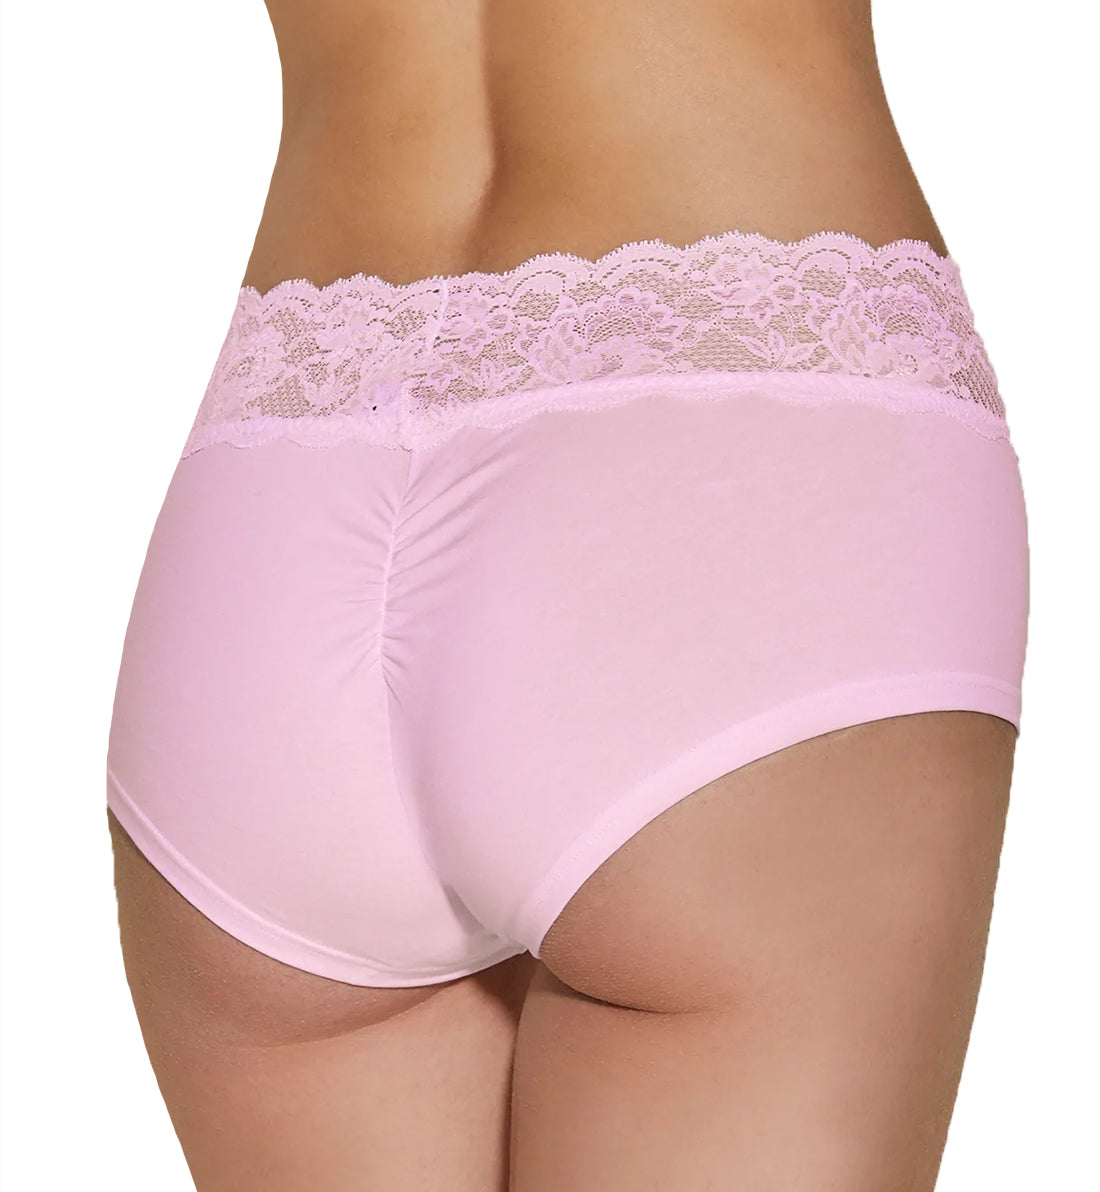 Cosabella Never Say Never Peachie Hotpant (NEVER0743),L/XL,Jaipur Pink - Jaipur Pink,L/XL